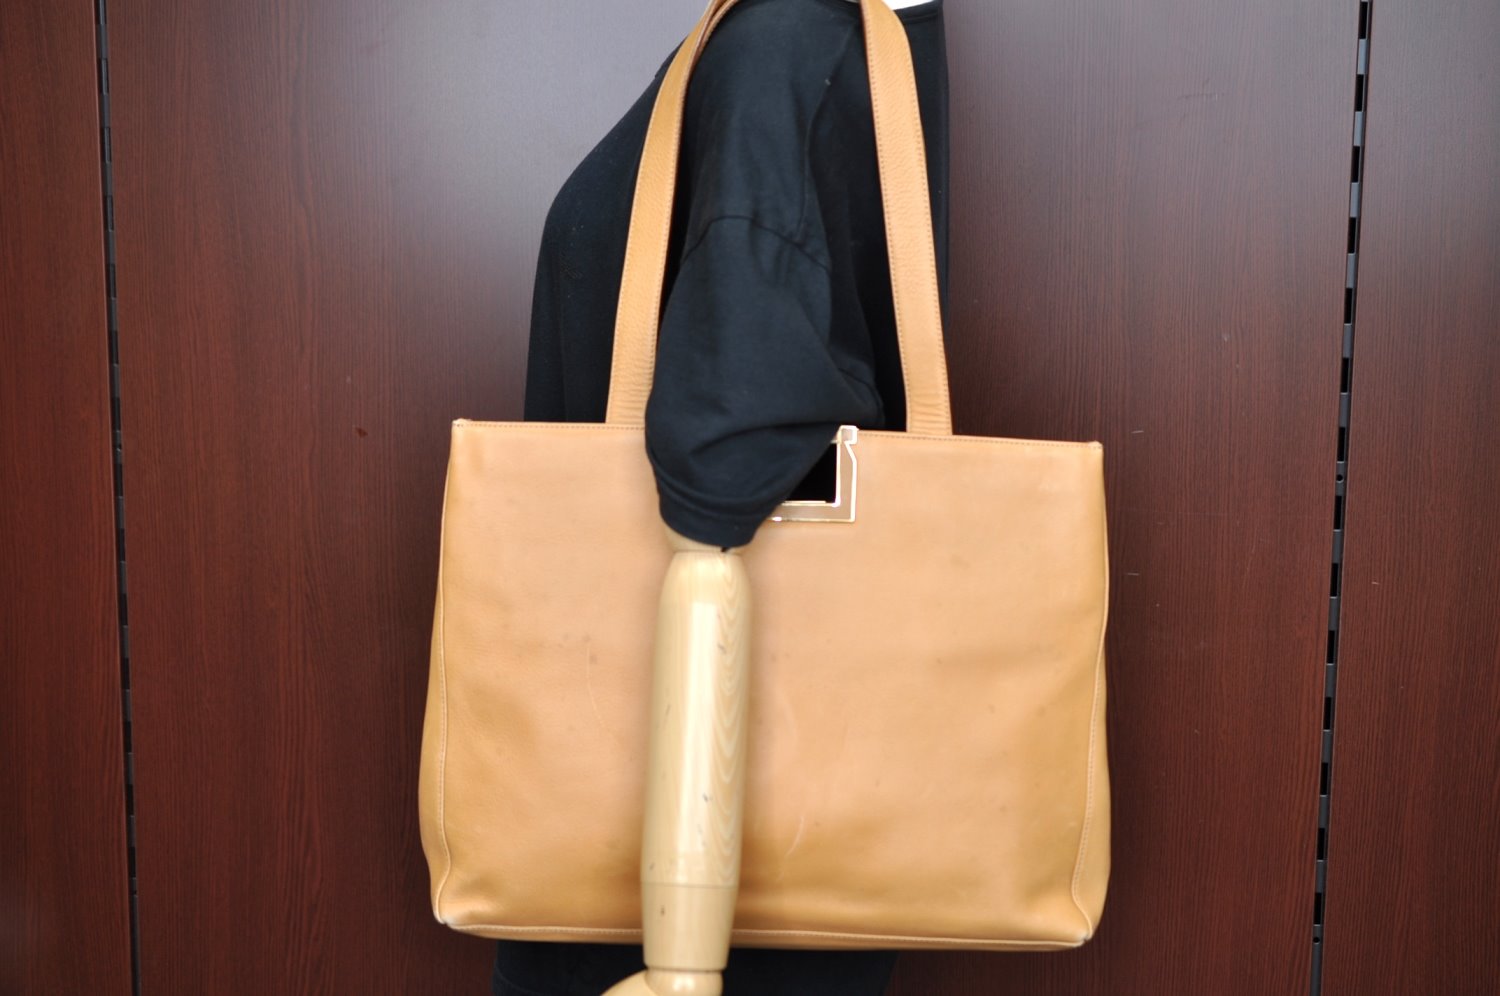 Authentic Ferragamo Shoulder Hand Bag Leather Beige K4318